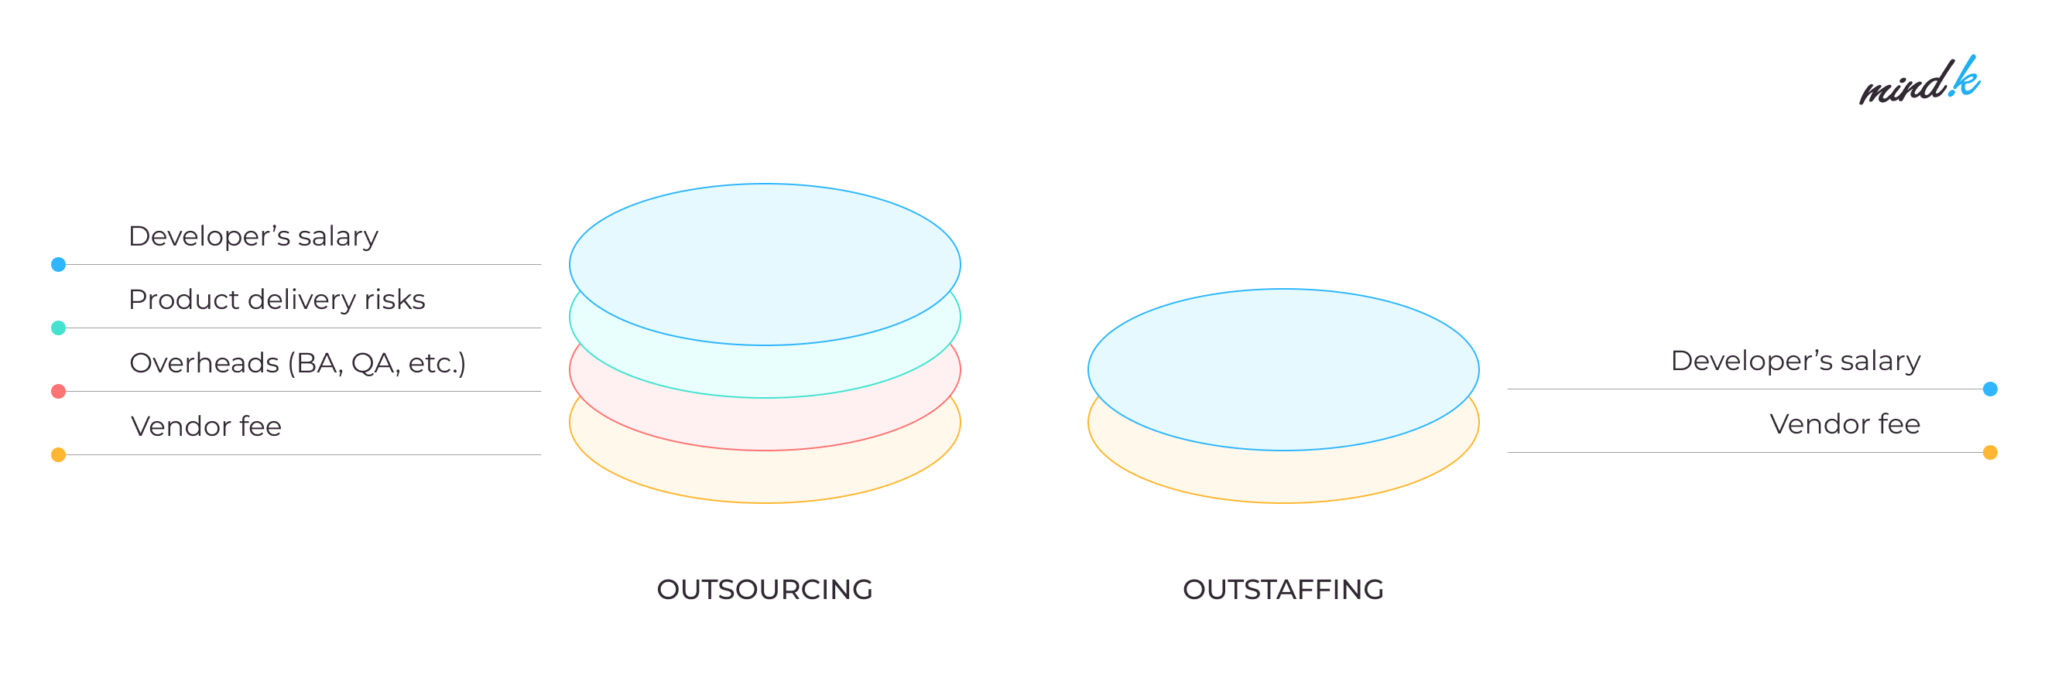 outsourcing vs outstaffing cost breakdown